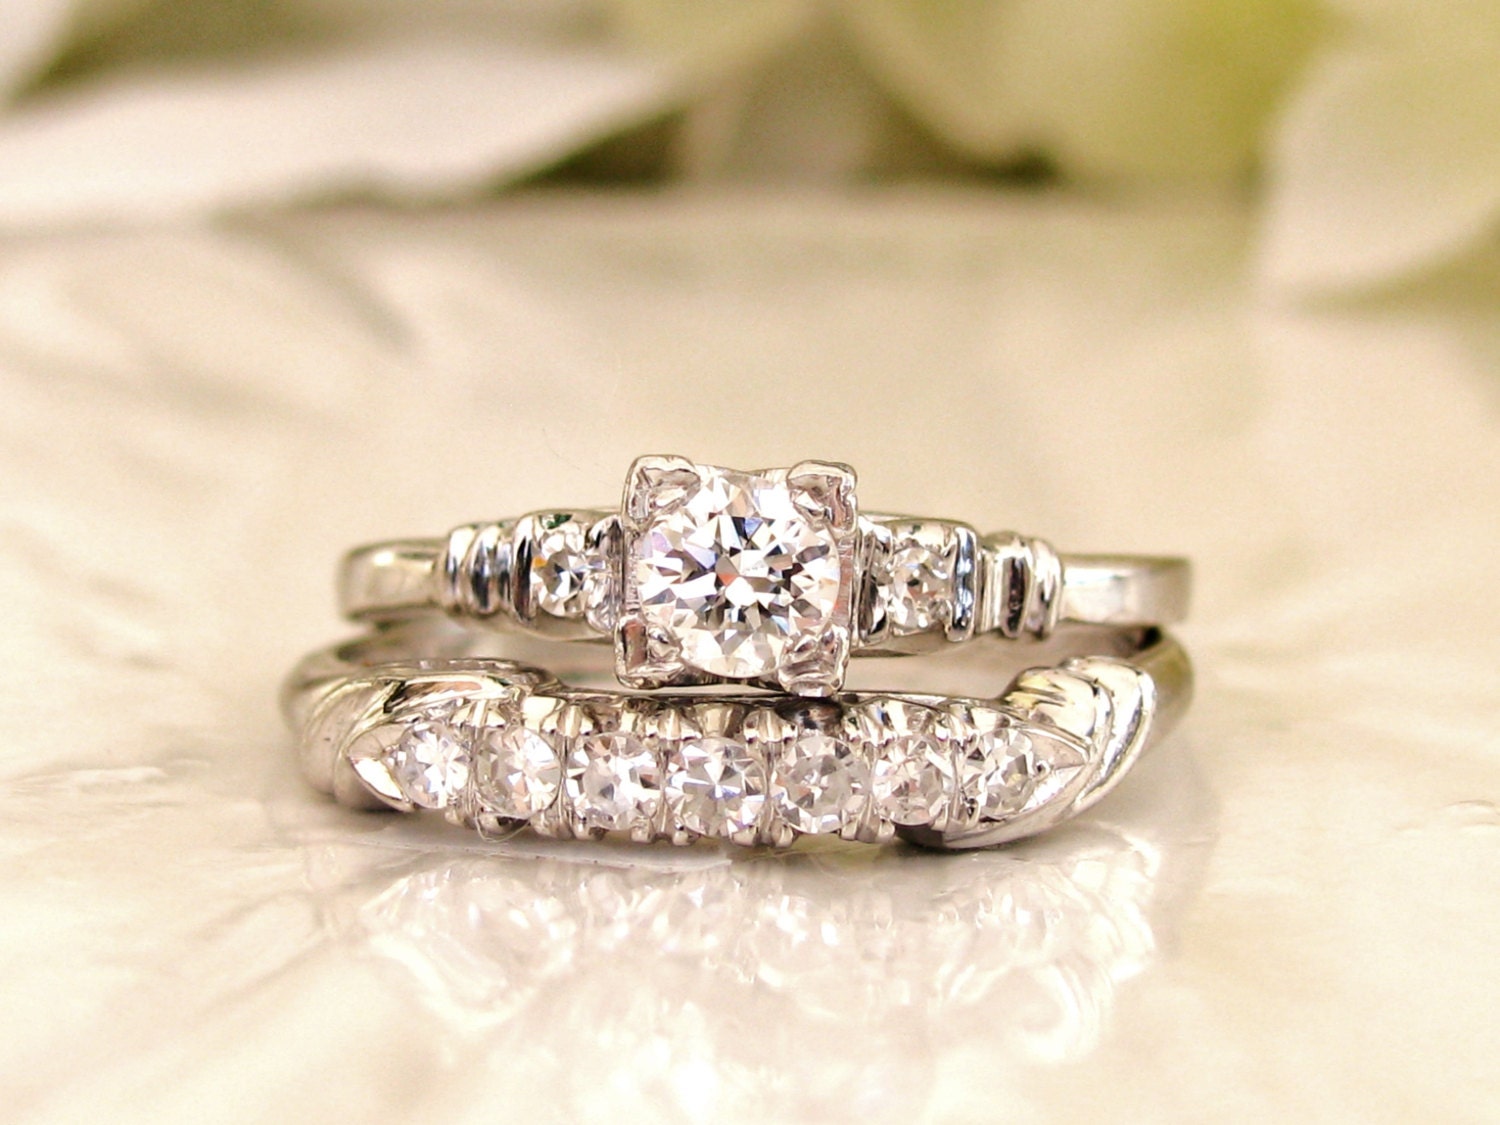 wedding ring sets